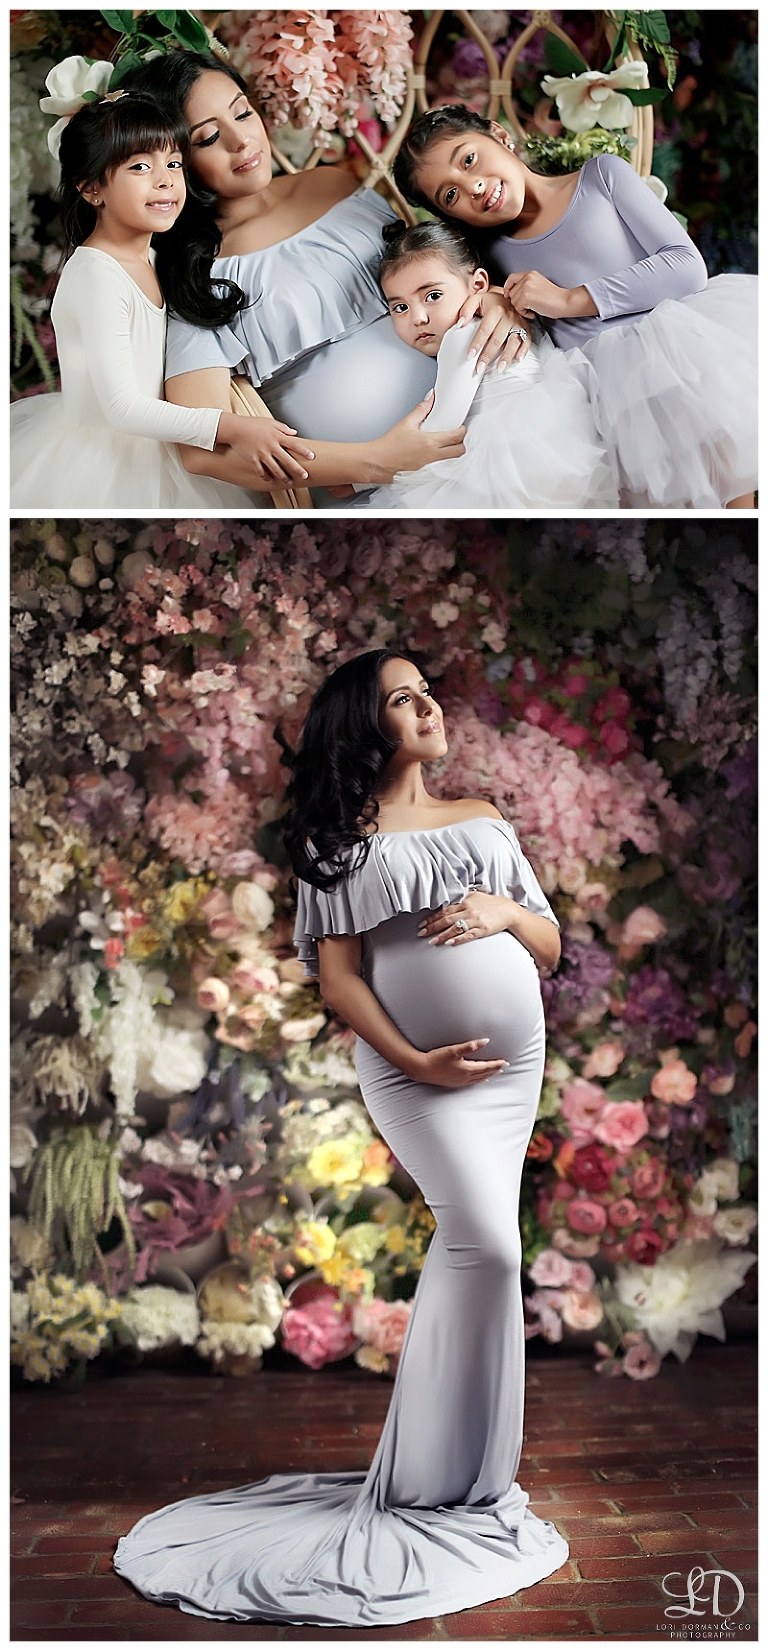 sweet maternity photoshoot-lori dorman photography-maternity boudoir-professional photographer_5475.jpg